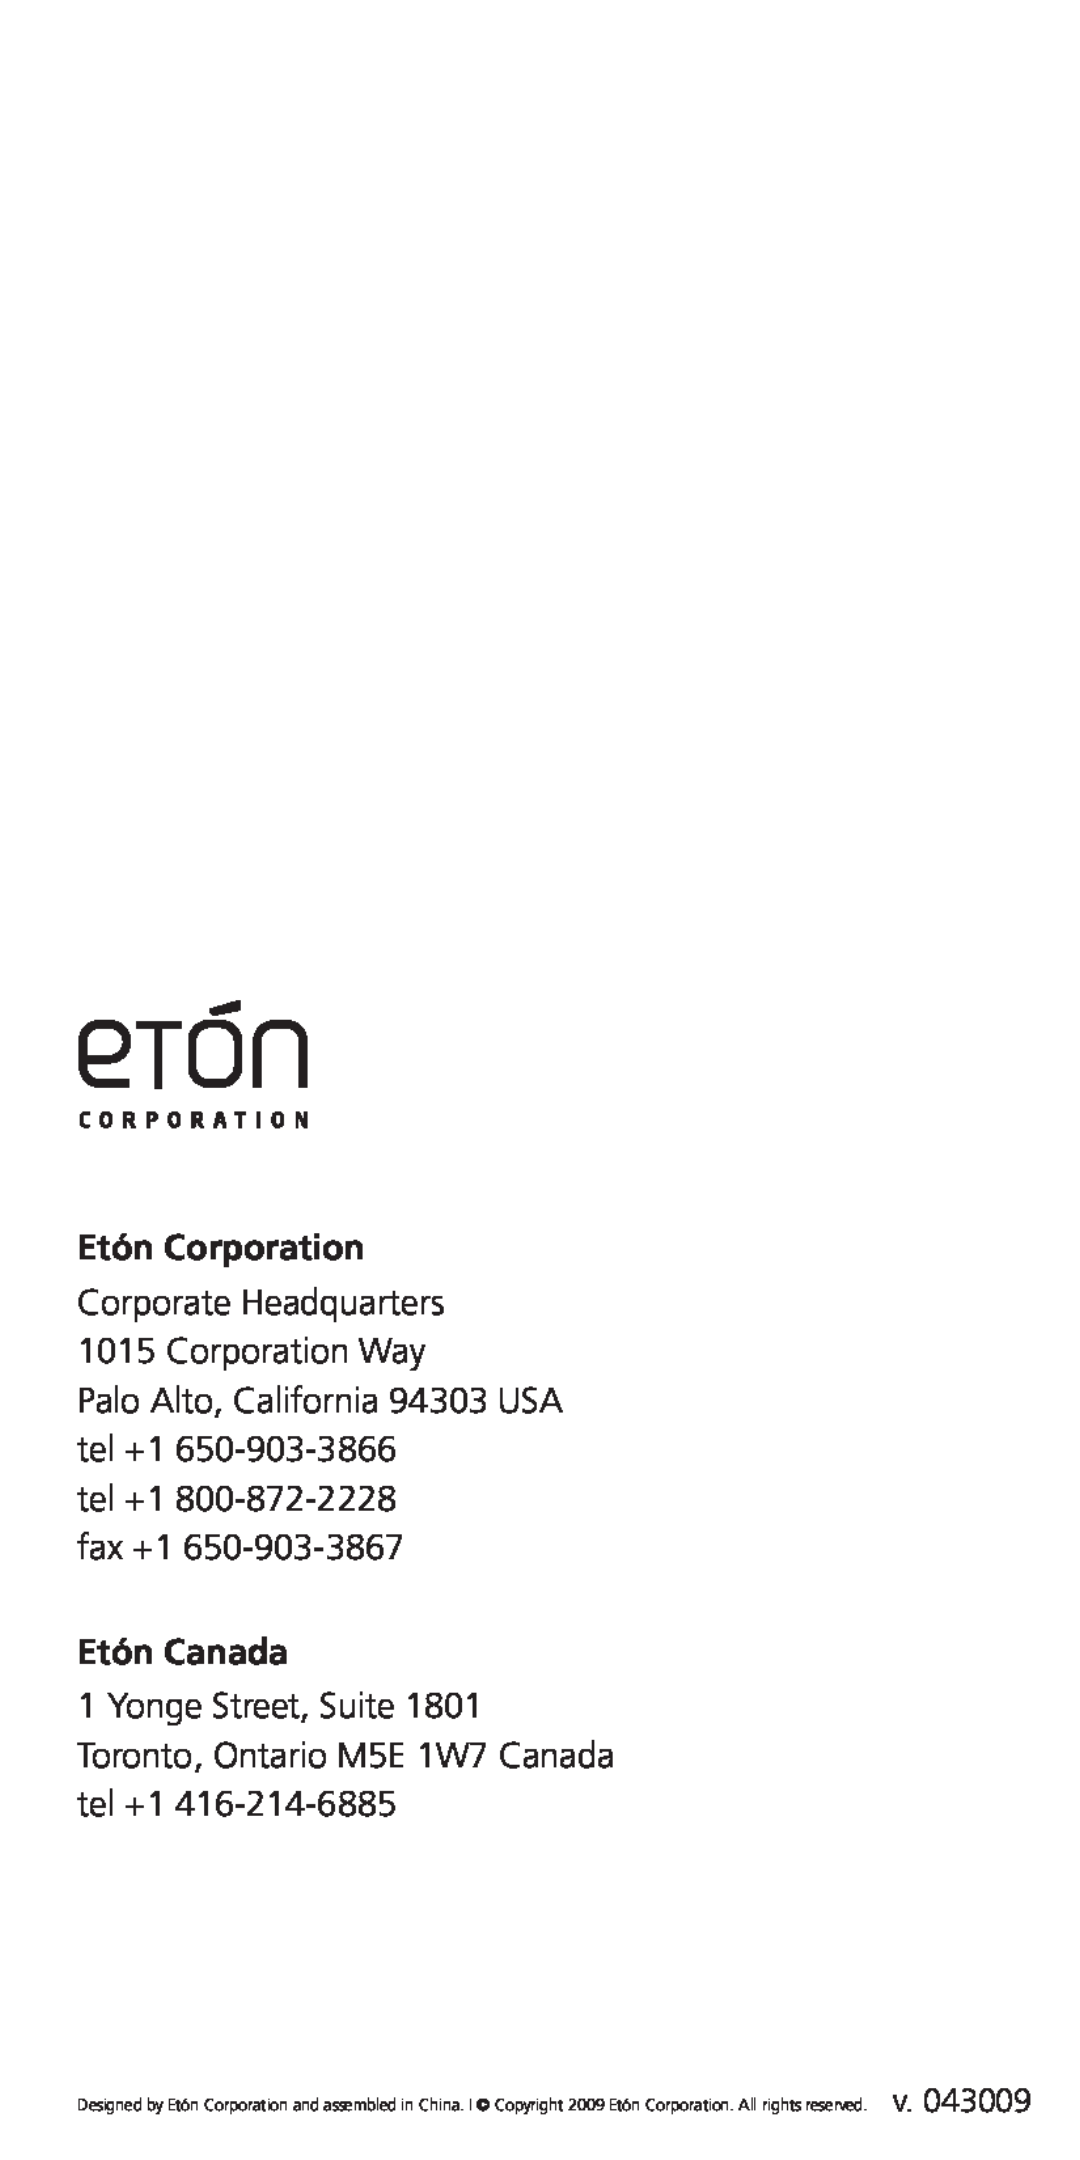 Eton ARCFR160WXW WHT Etón Canada, Etón Corporation, Corporate Headquarters 1015 Corporation Way, tel +1 800-872-2228fax +1 